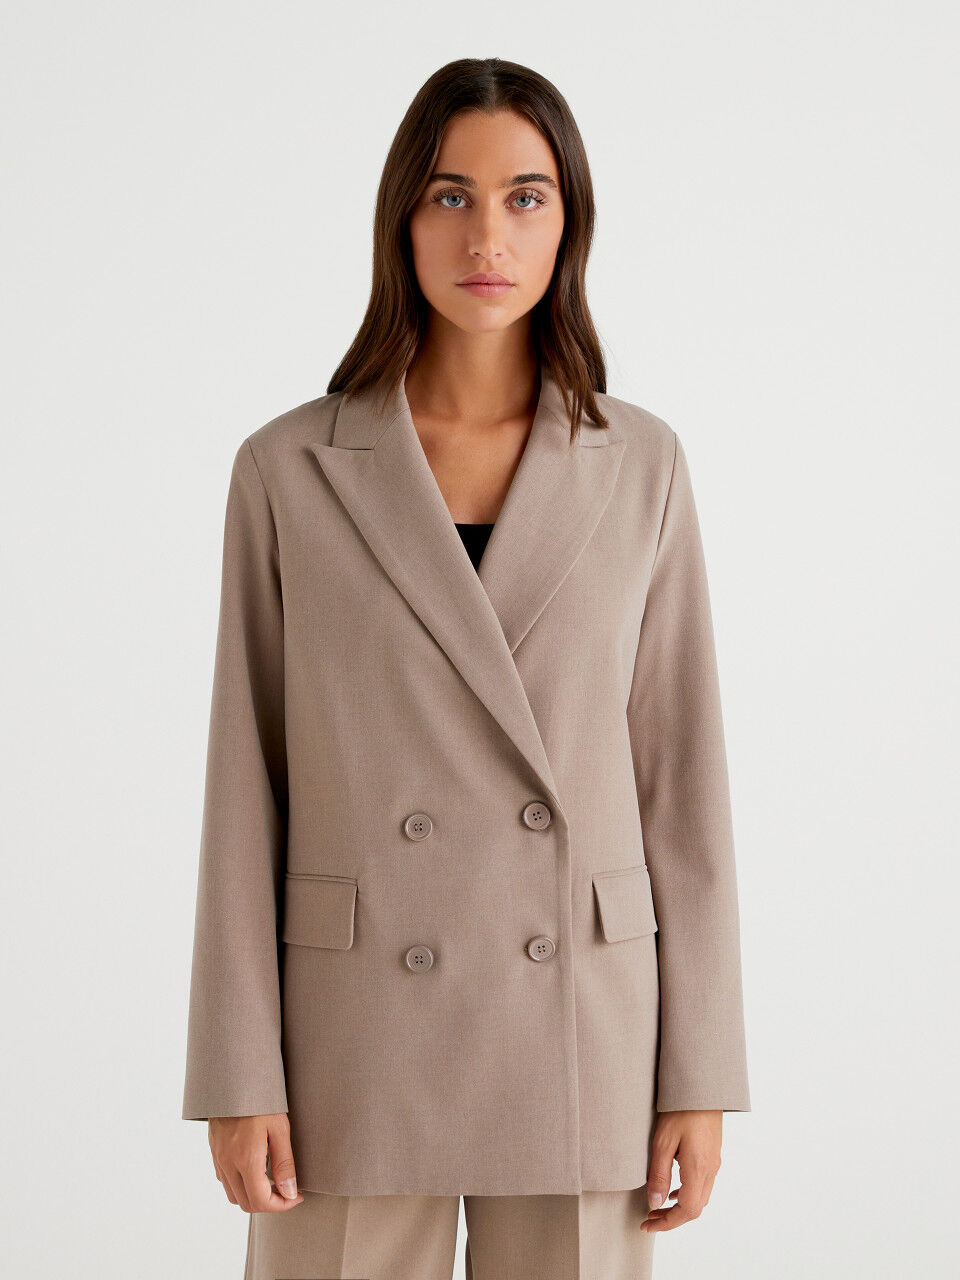 discount 69% Benetton Long coat Navy Blue L WOMEN FASHION Coats Elegant 